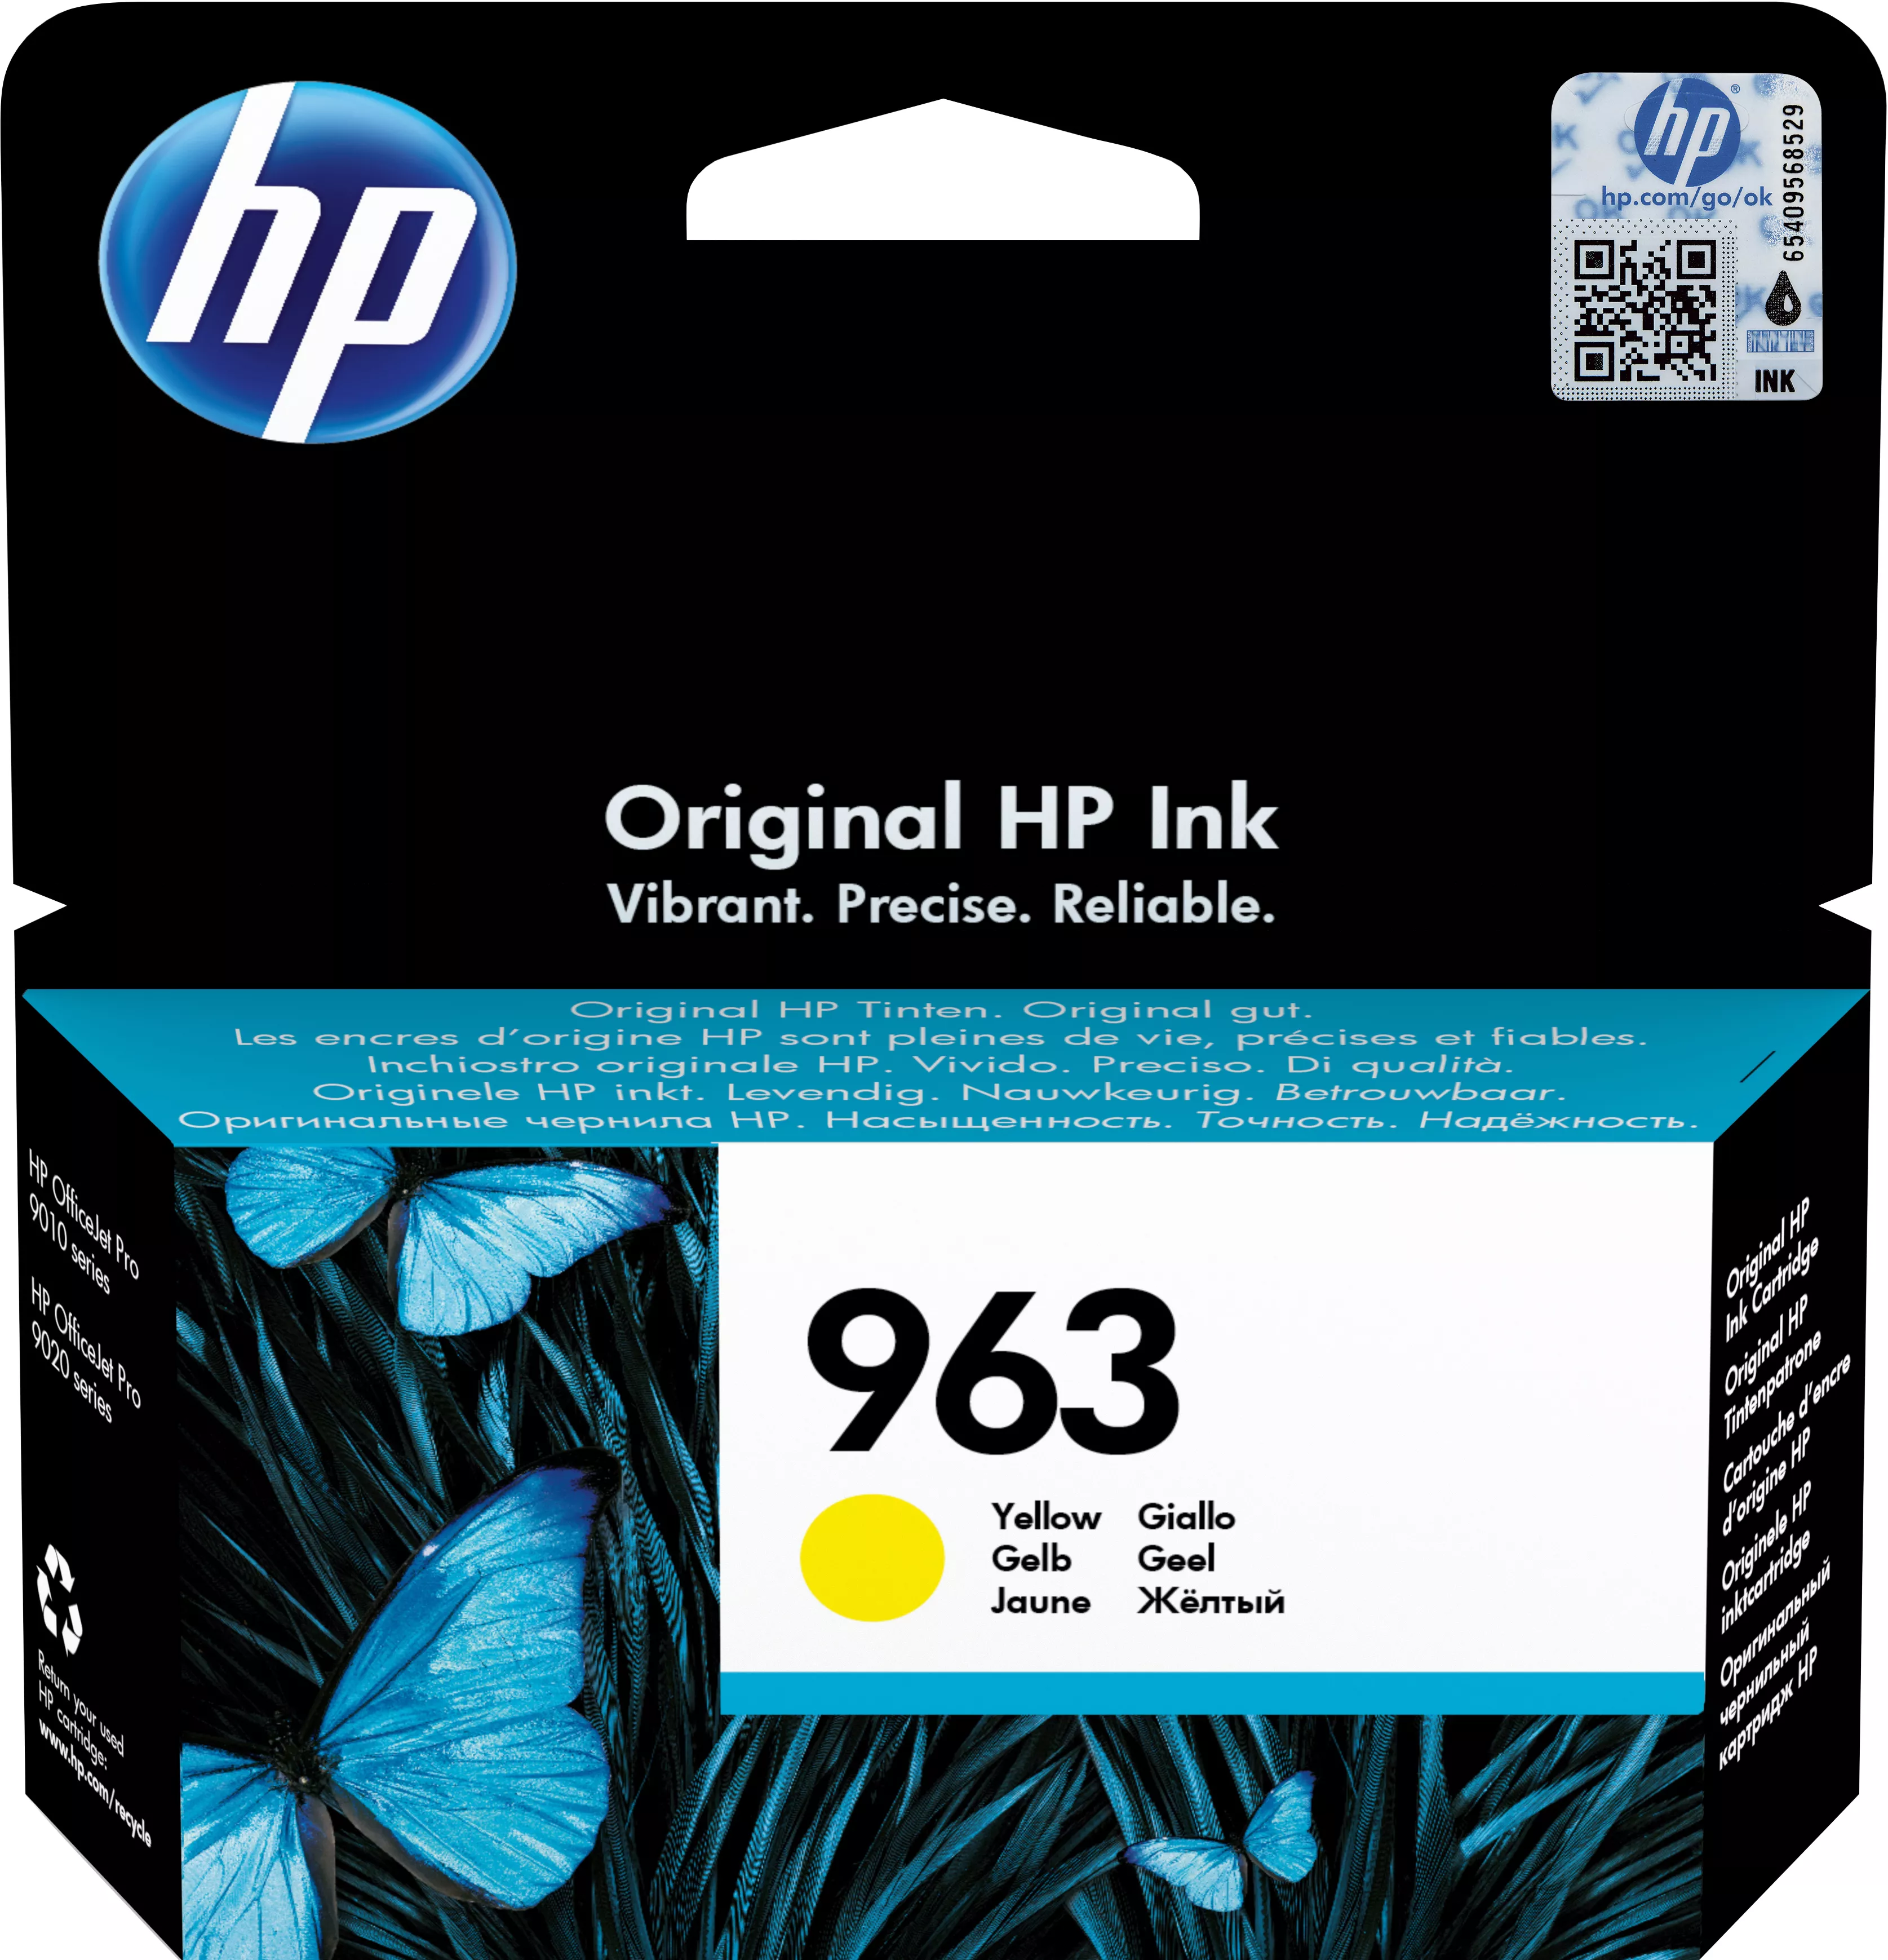 Achat HP 963 Yellow Original Ink Cartridge au meilleur prix